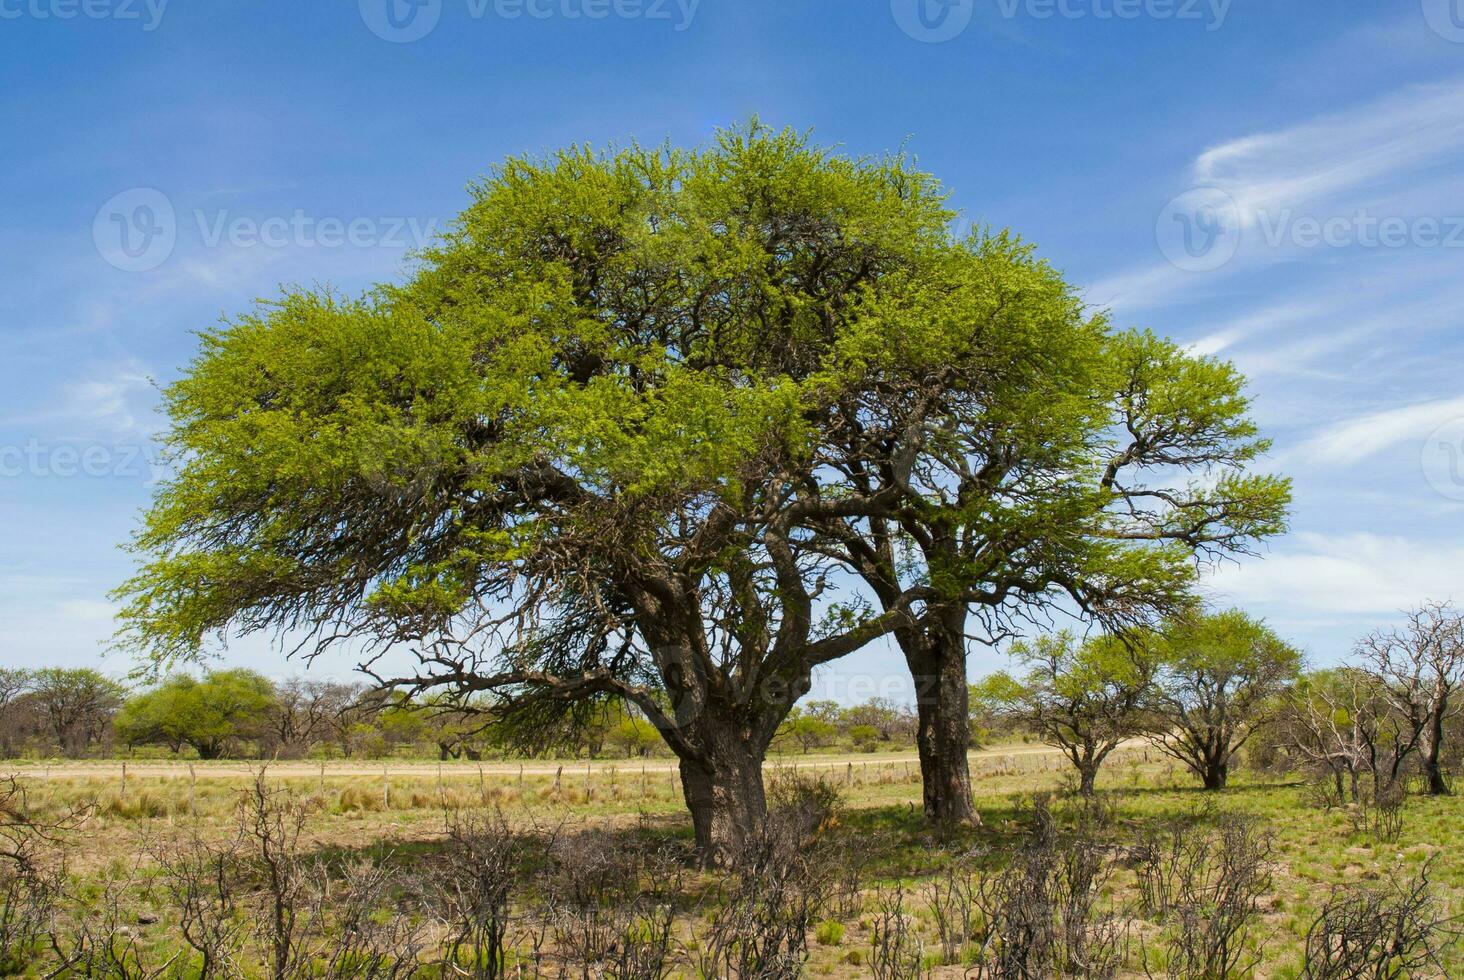 pampas träd och gräs landskap, la pampa provins, argentina foto